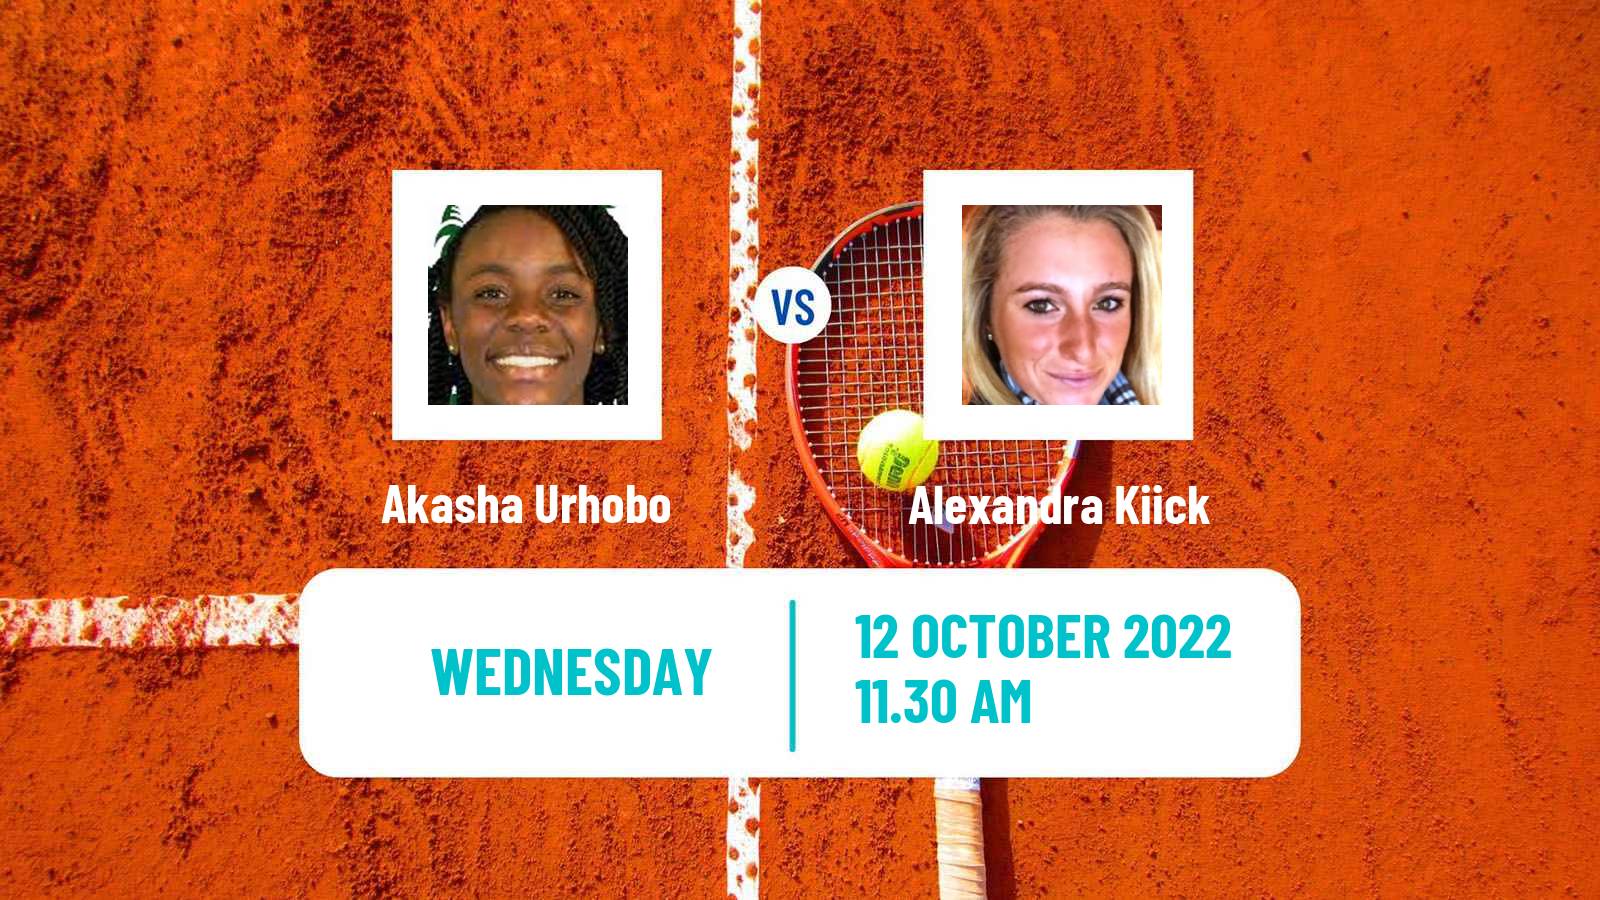 Tennis ITF Tournaments Akasha Urhobo - Alexandra Kiick